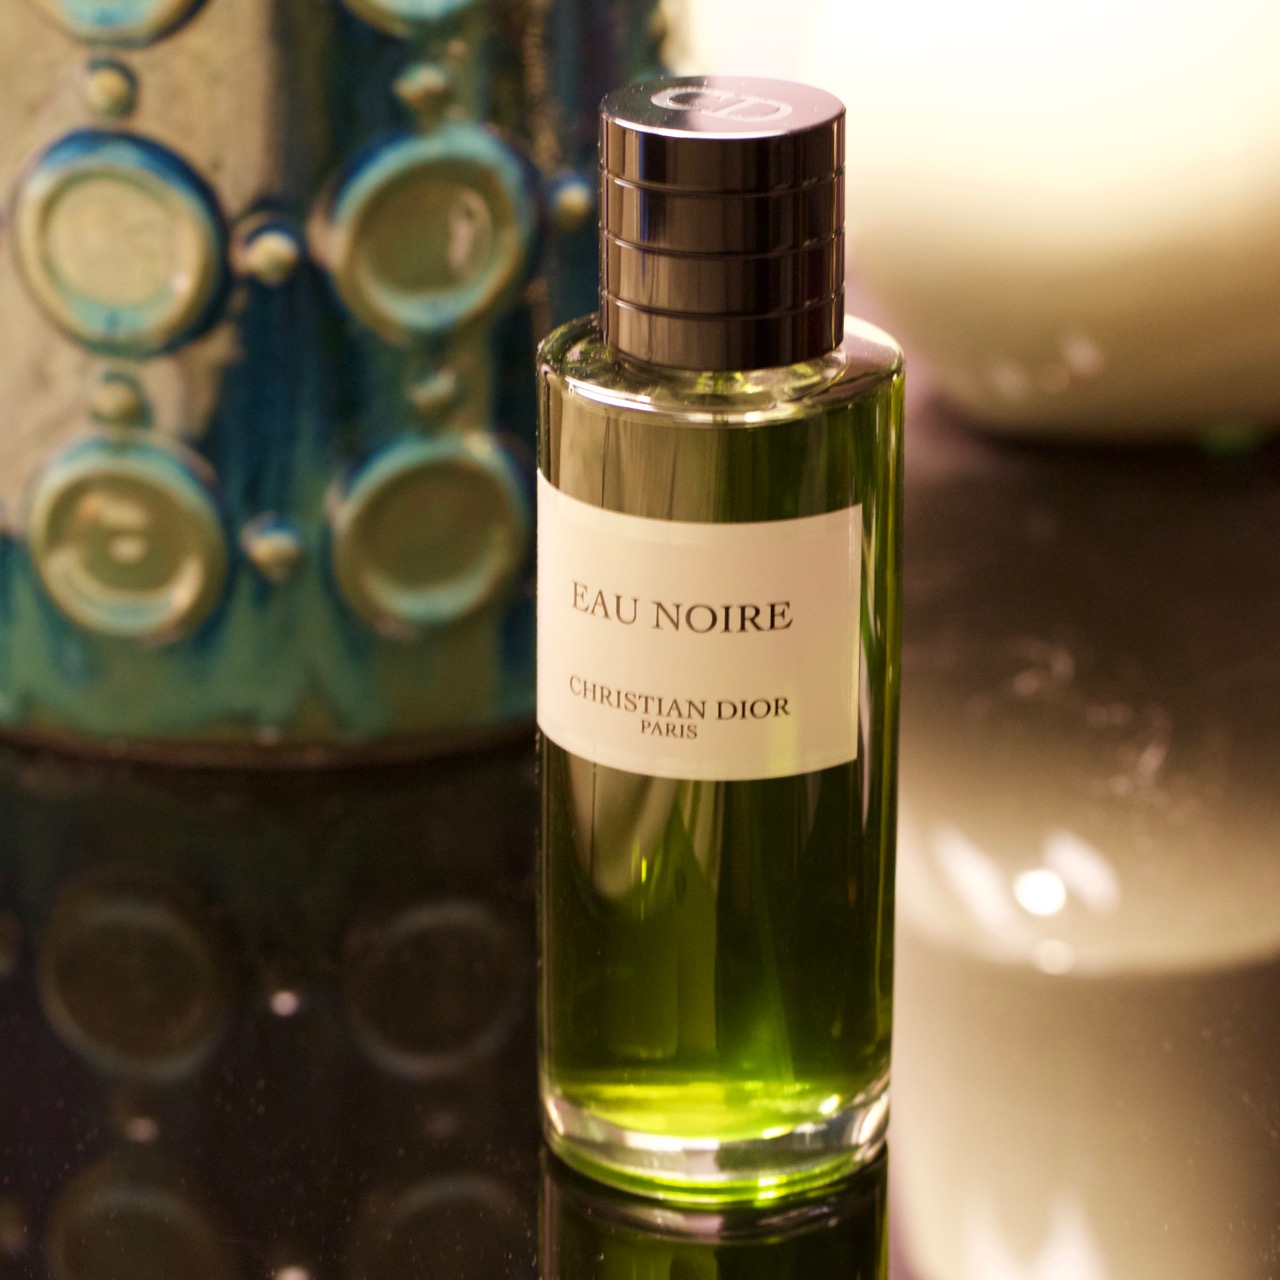 Eau Noire by Francis Kurkdjian for DIOR Perfume Posse Review Portia